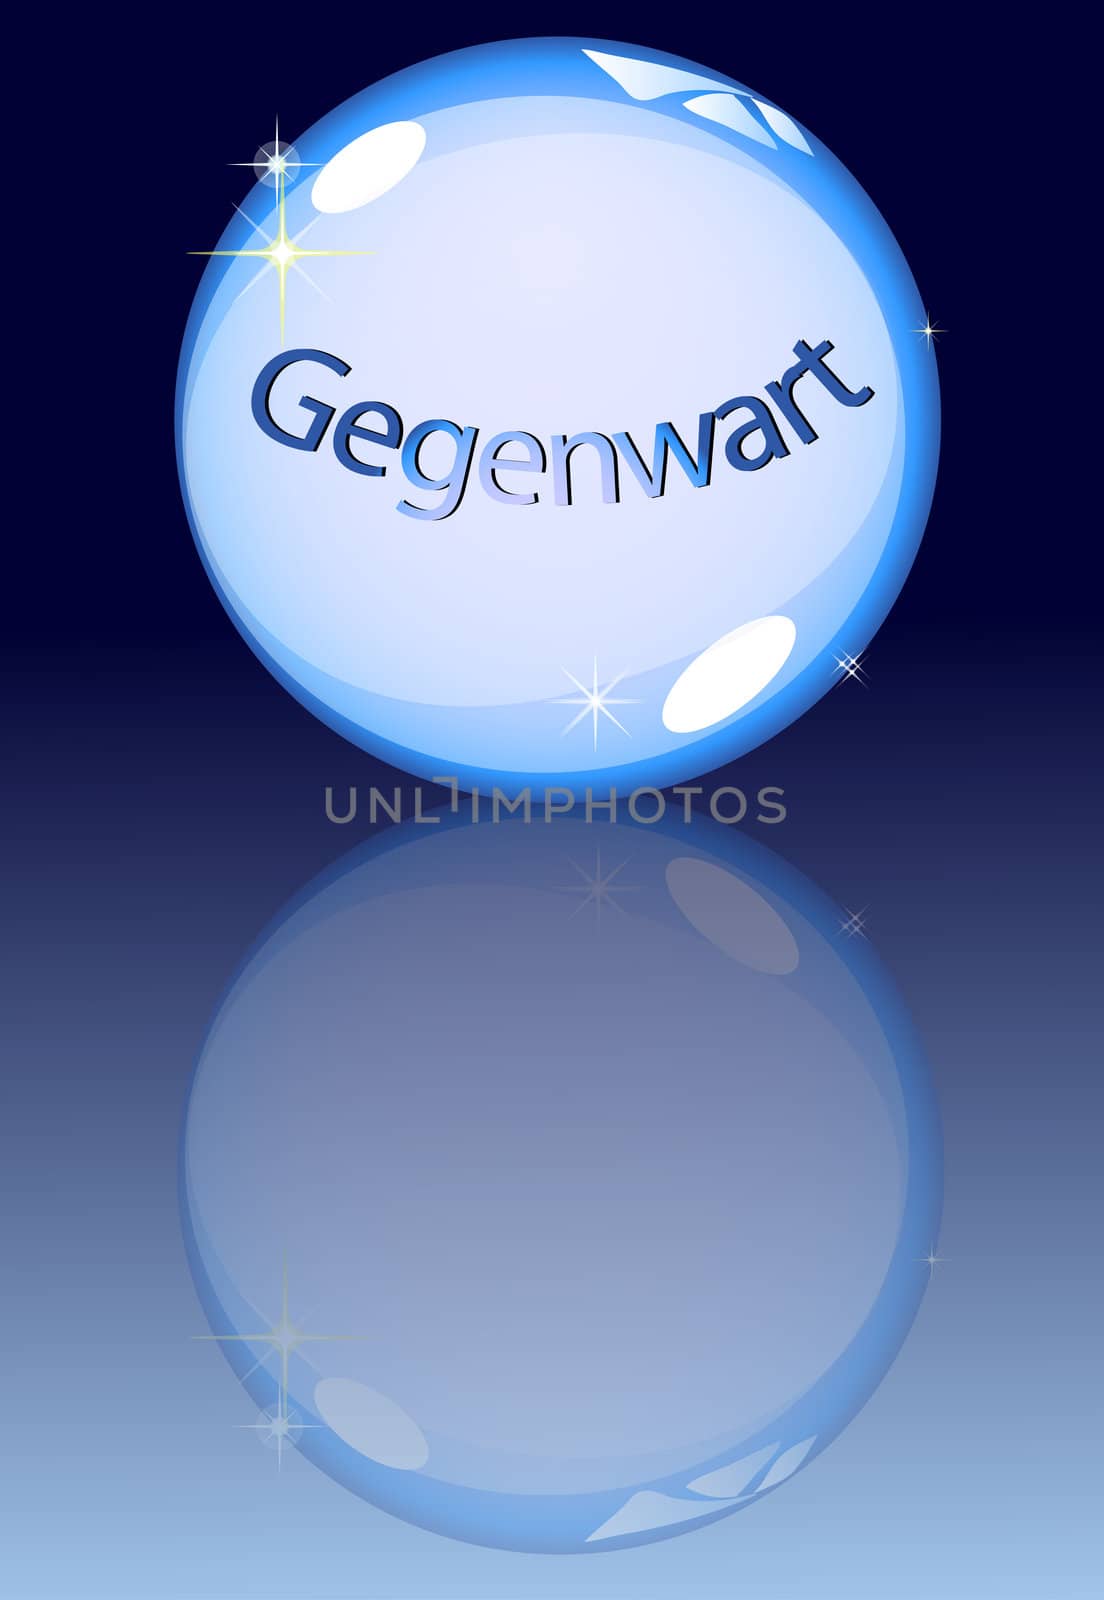 German Crystal Ball Present by peromarketing